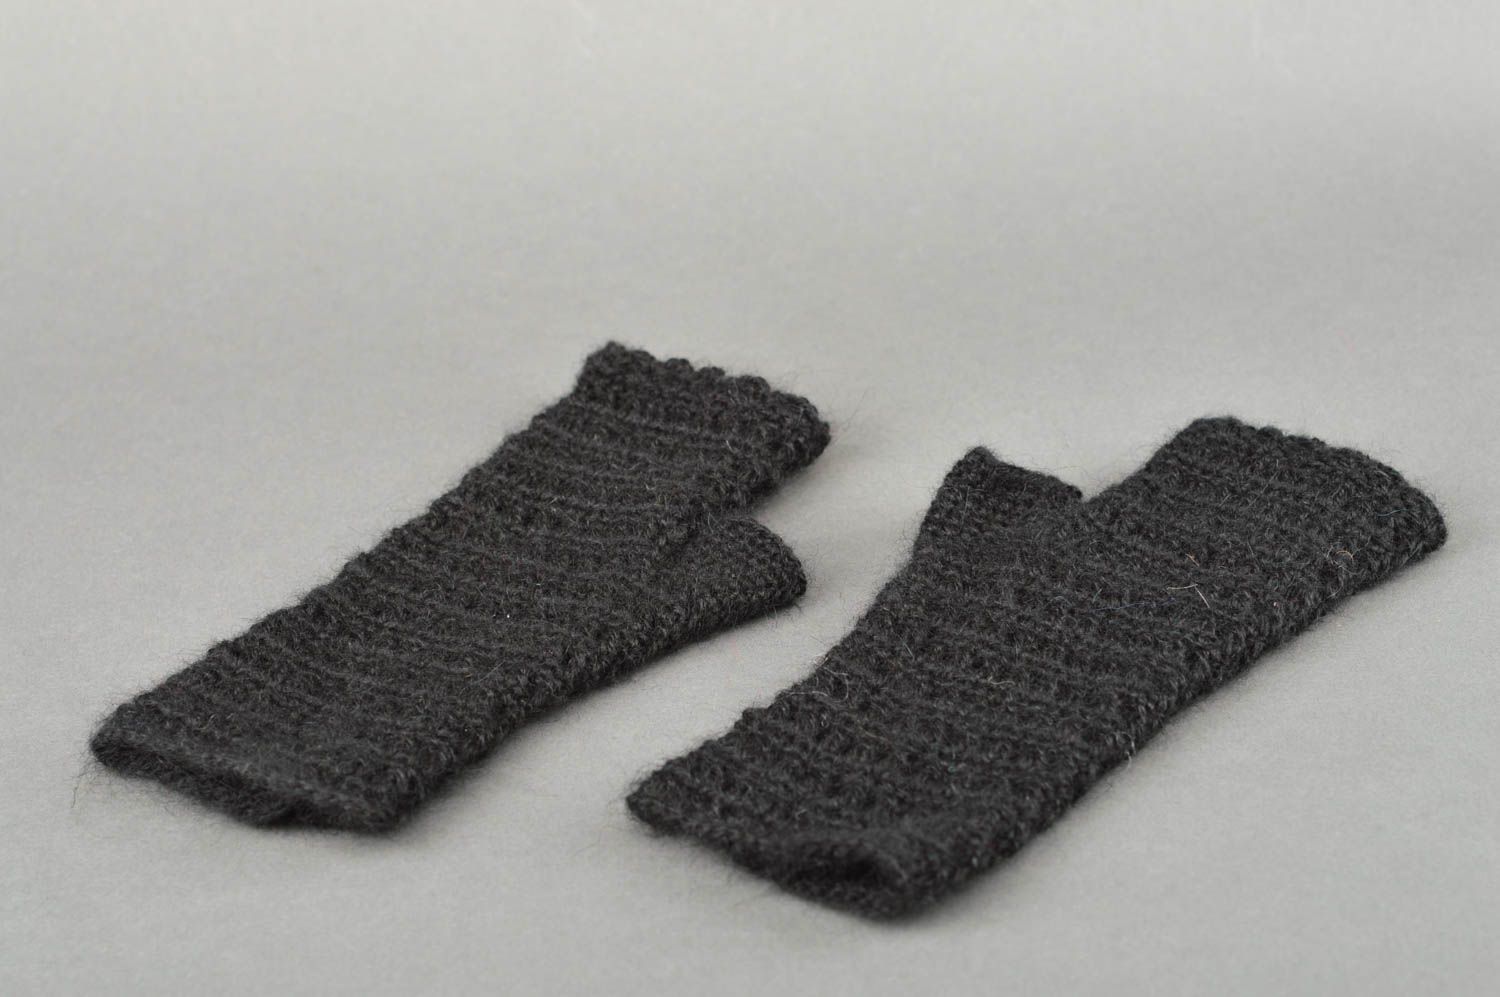 Beautiful handmade crochet mittens crochet ideas winter outfit gifts for her photo 3